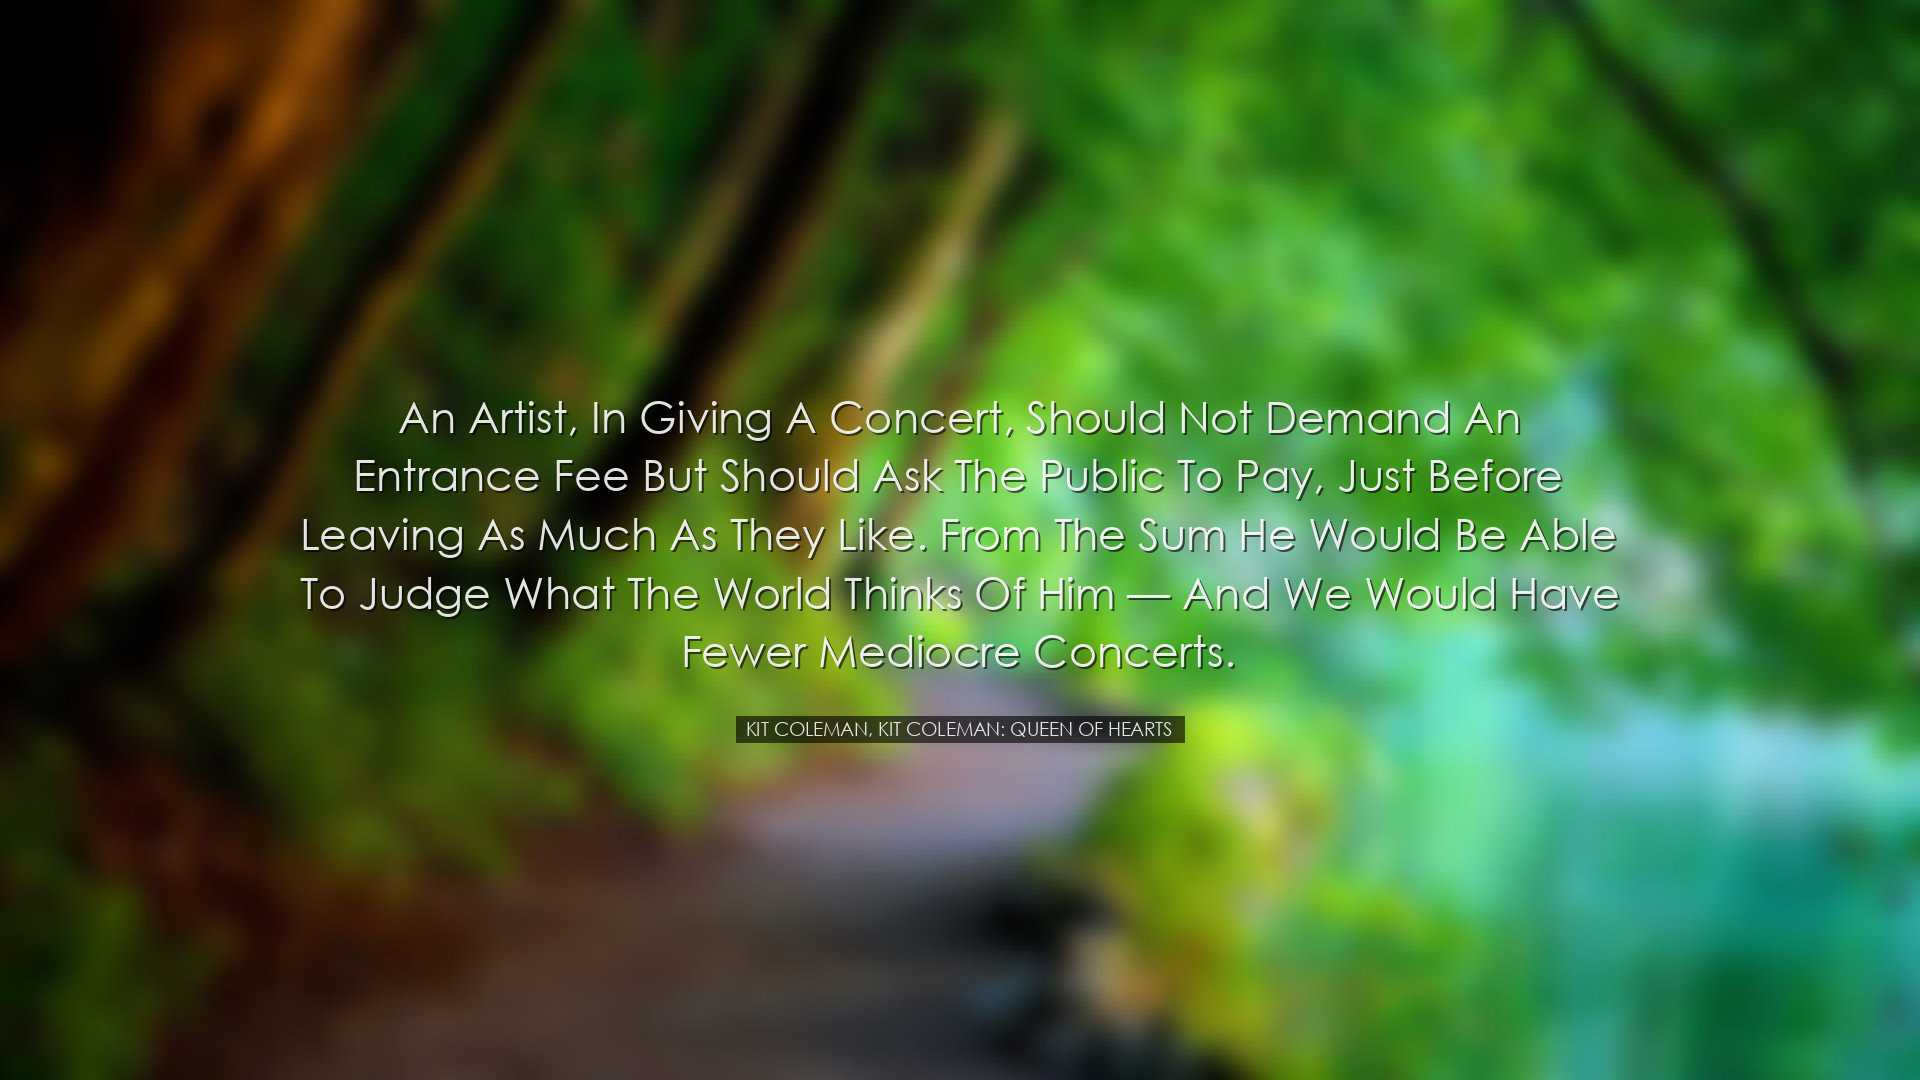 An artist, in giving a concert, should not demand an entrance fee